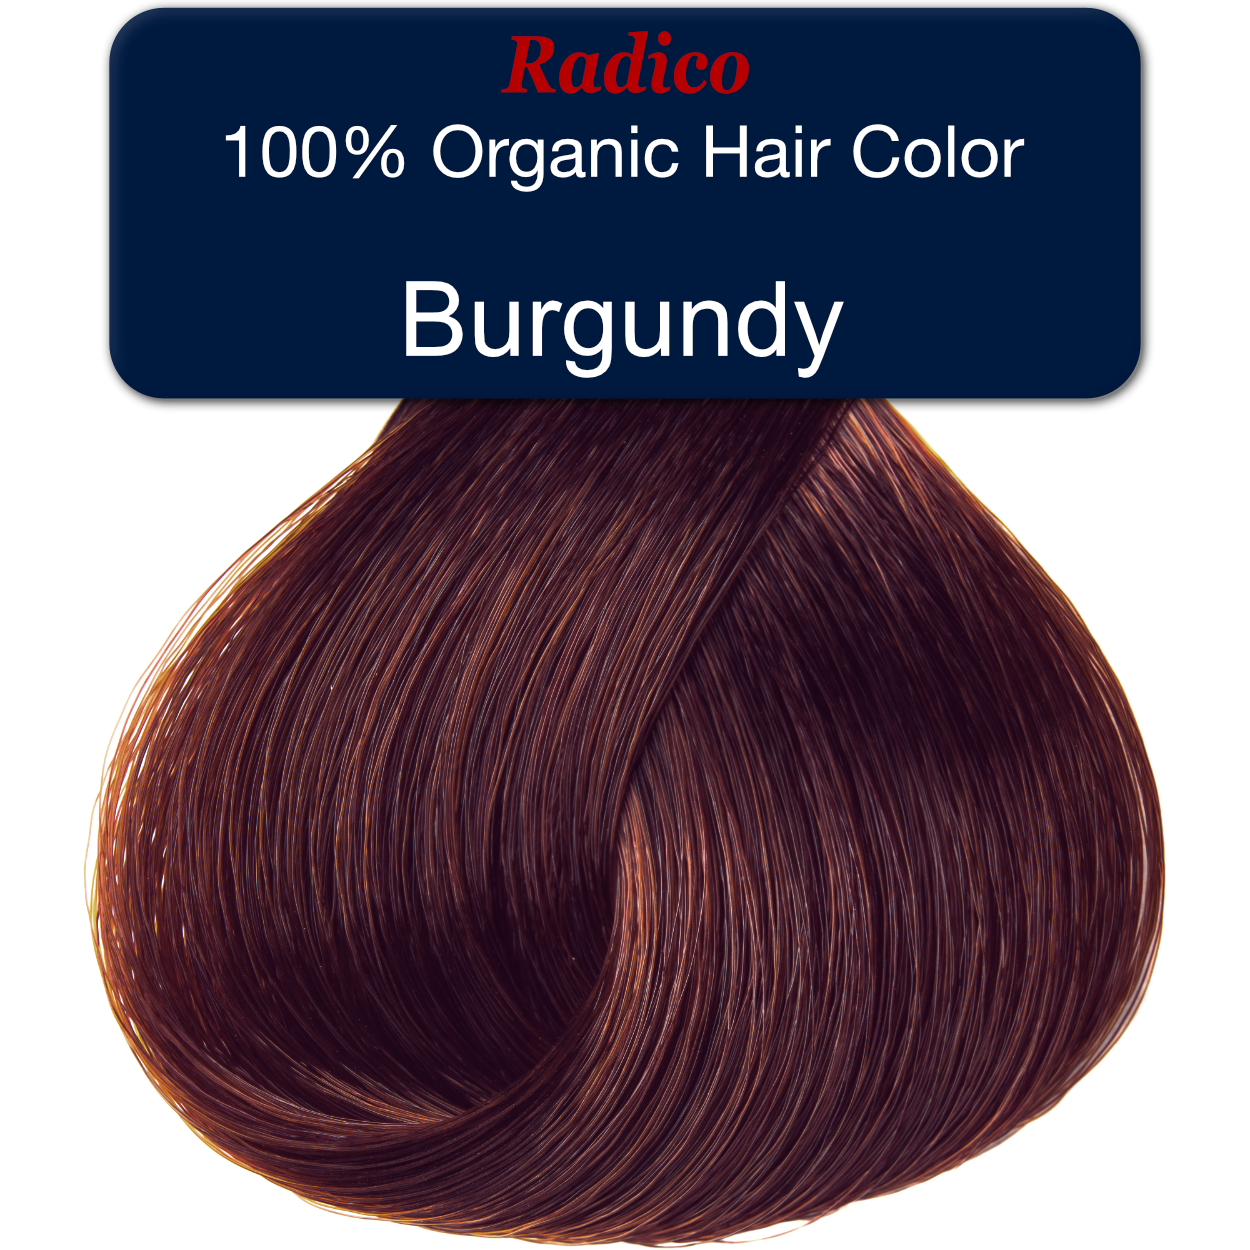 100% Organic hair color. Burgundy hair color sample.